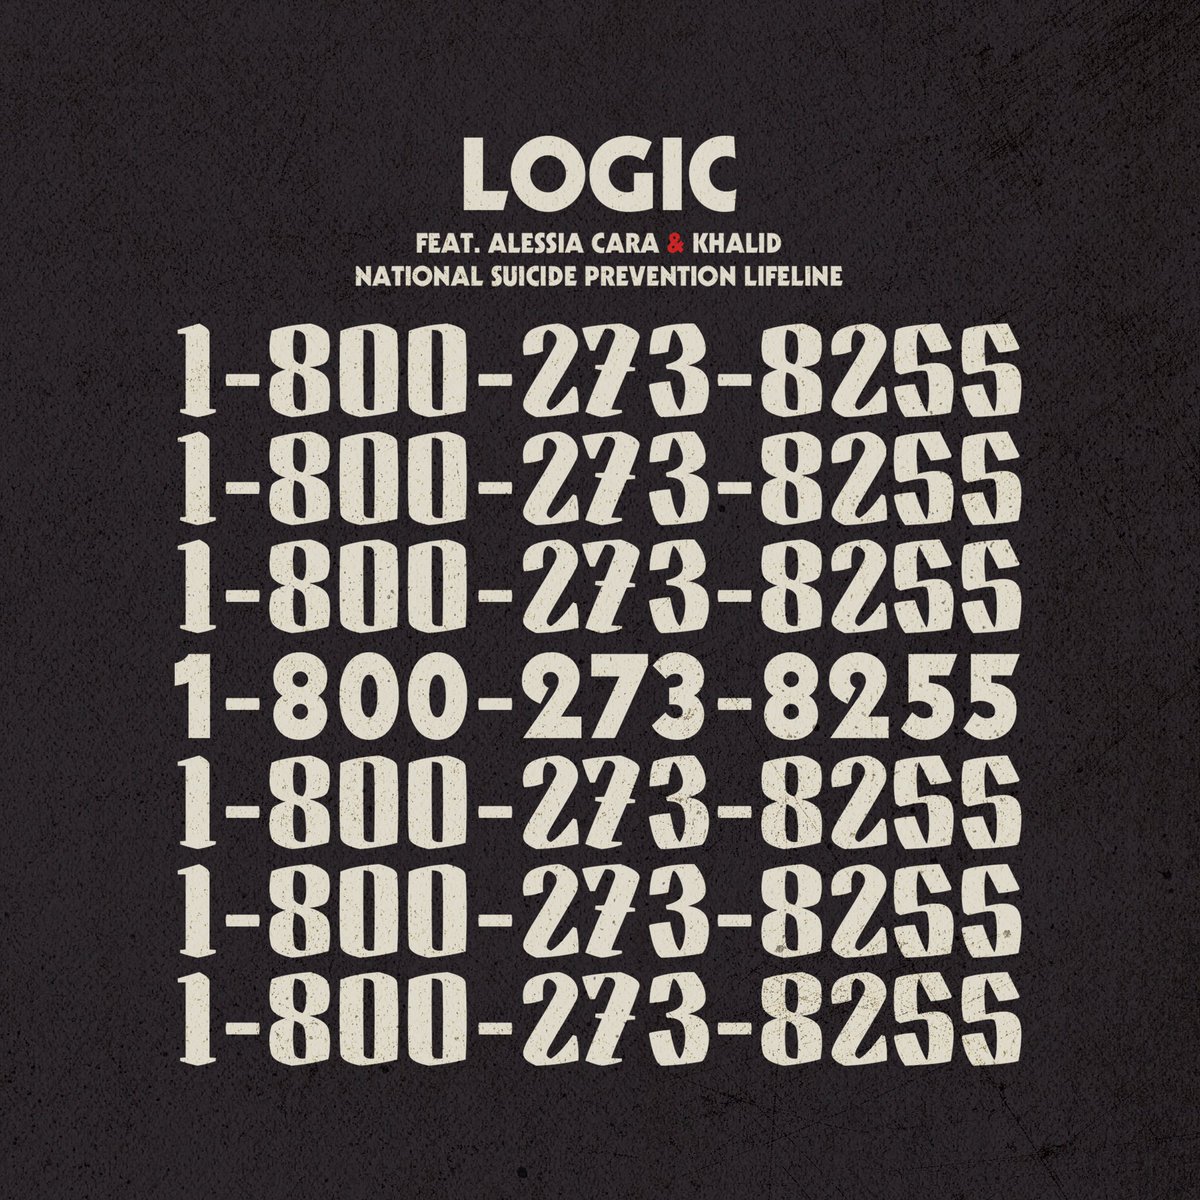 New Music: Logic – “1-800-273-8255” Feat. Alessia Cara & Khalid [LISTEN]